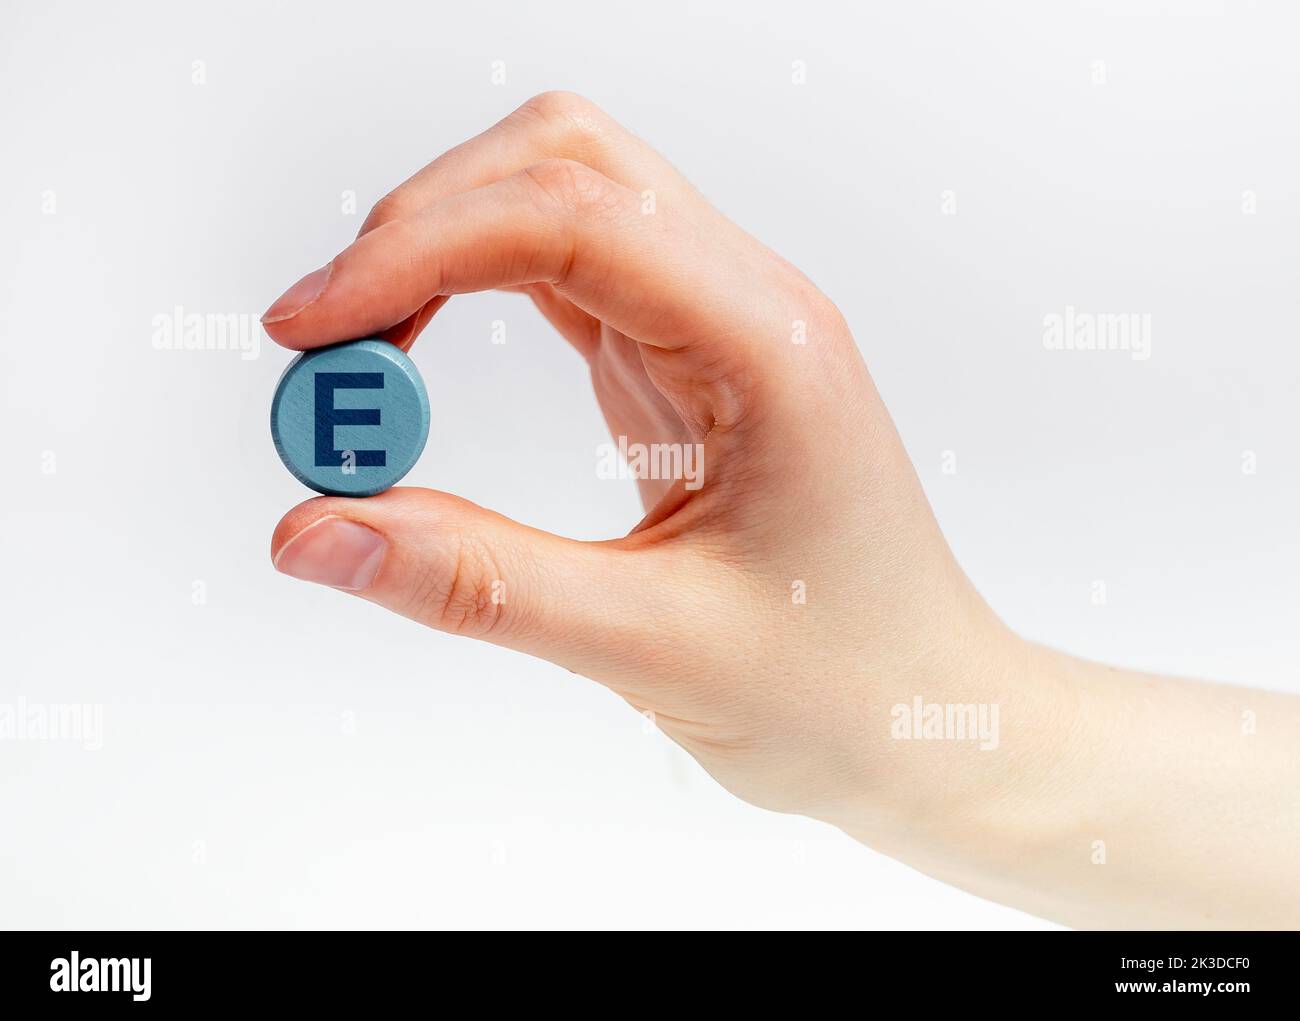 E vitamin round pill between fingers closeup. High quality photo Stock Photo